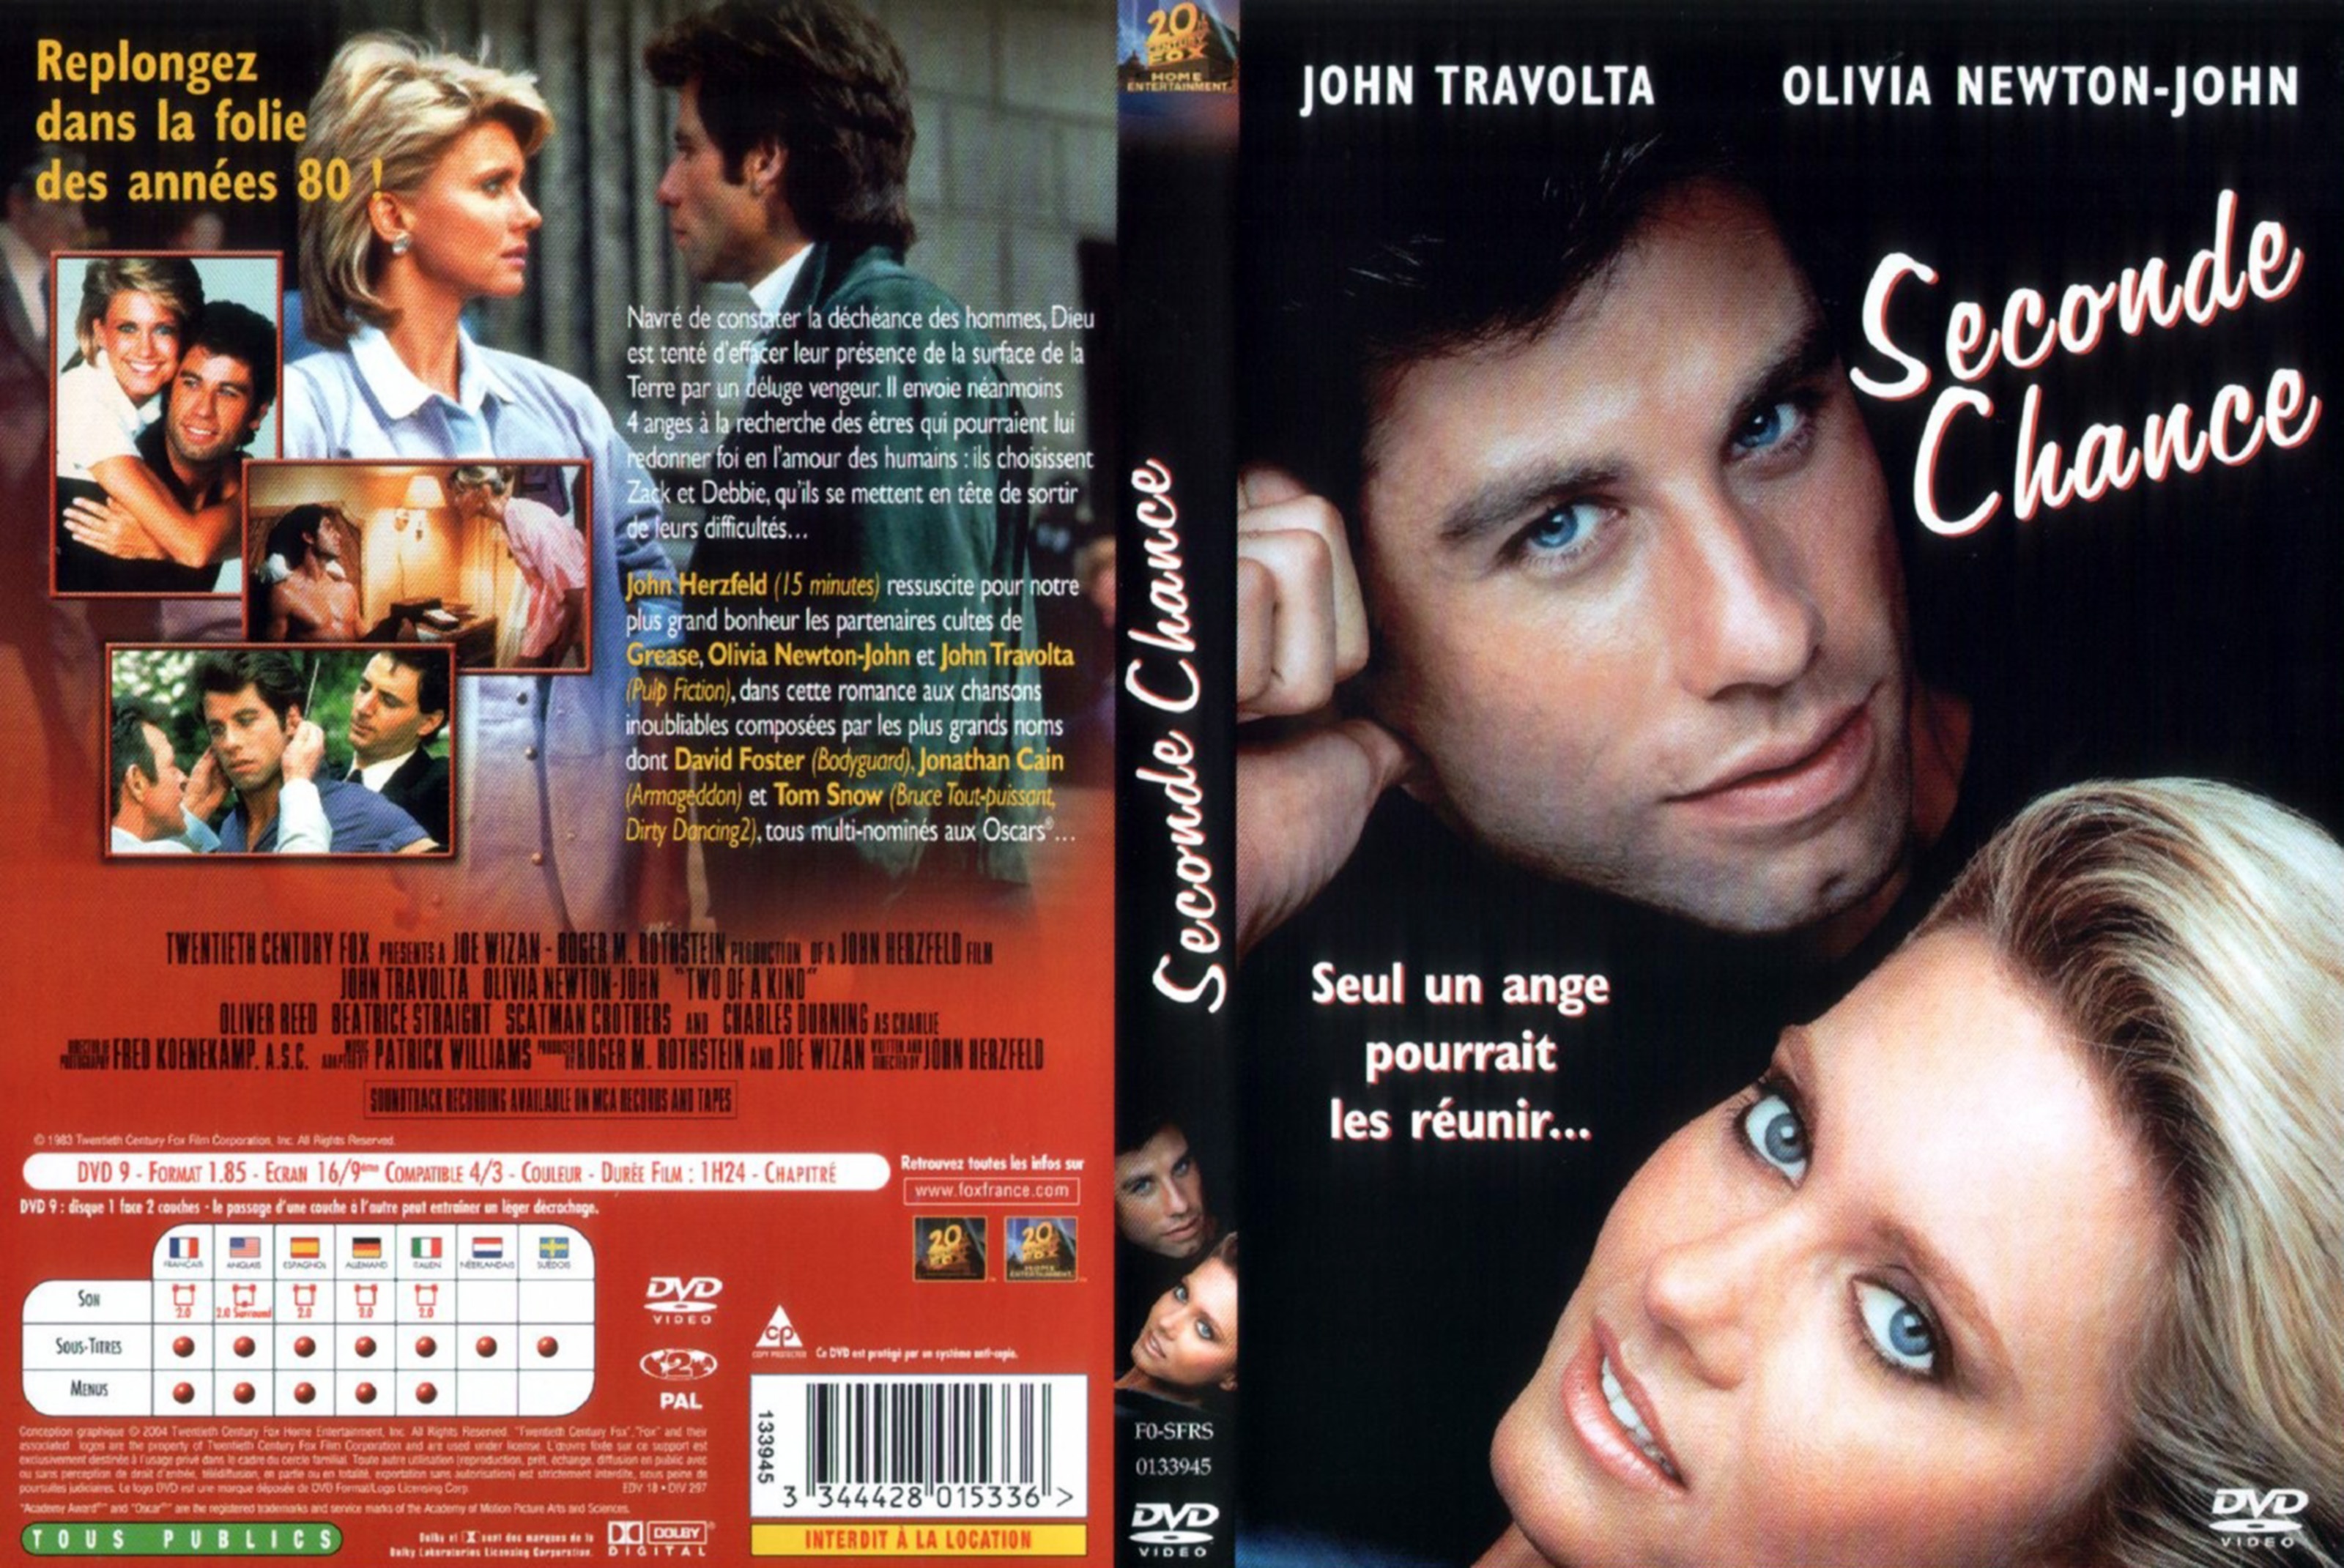 Jaquette DVD Seconde chance (John Travolta)